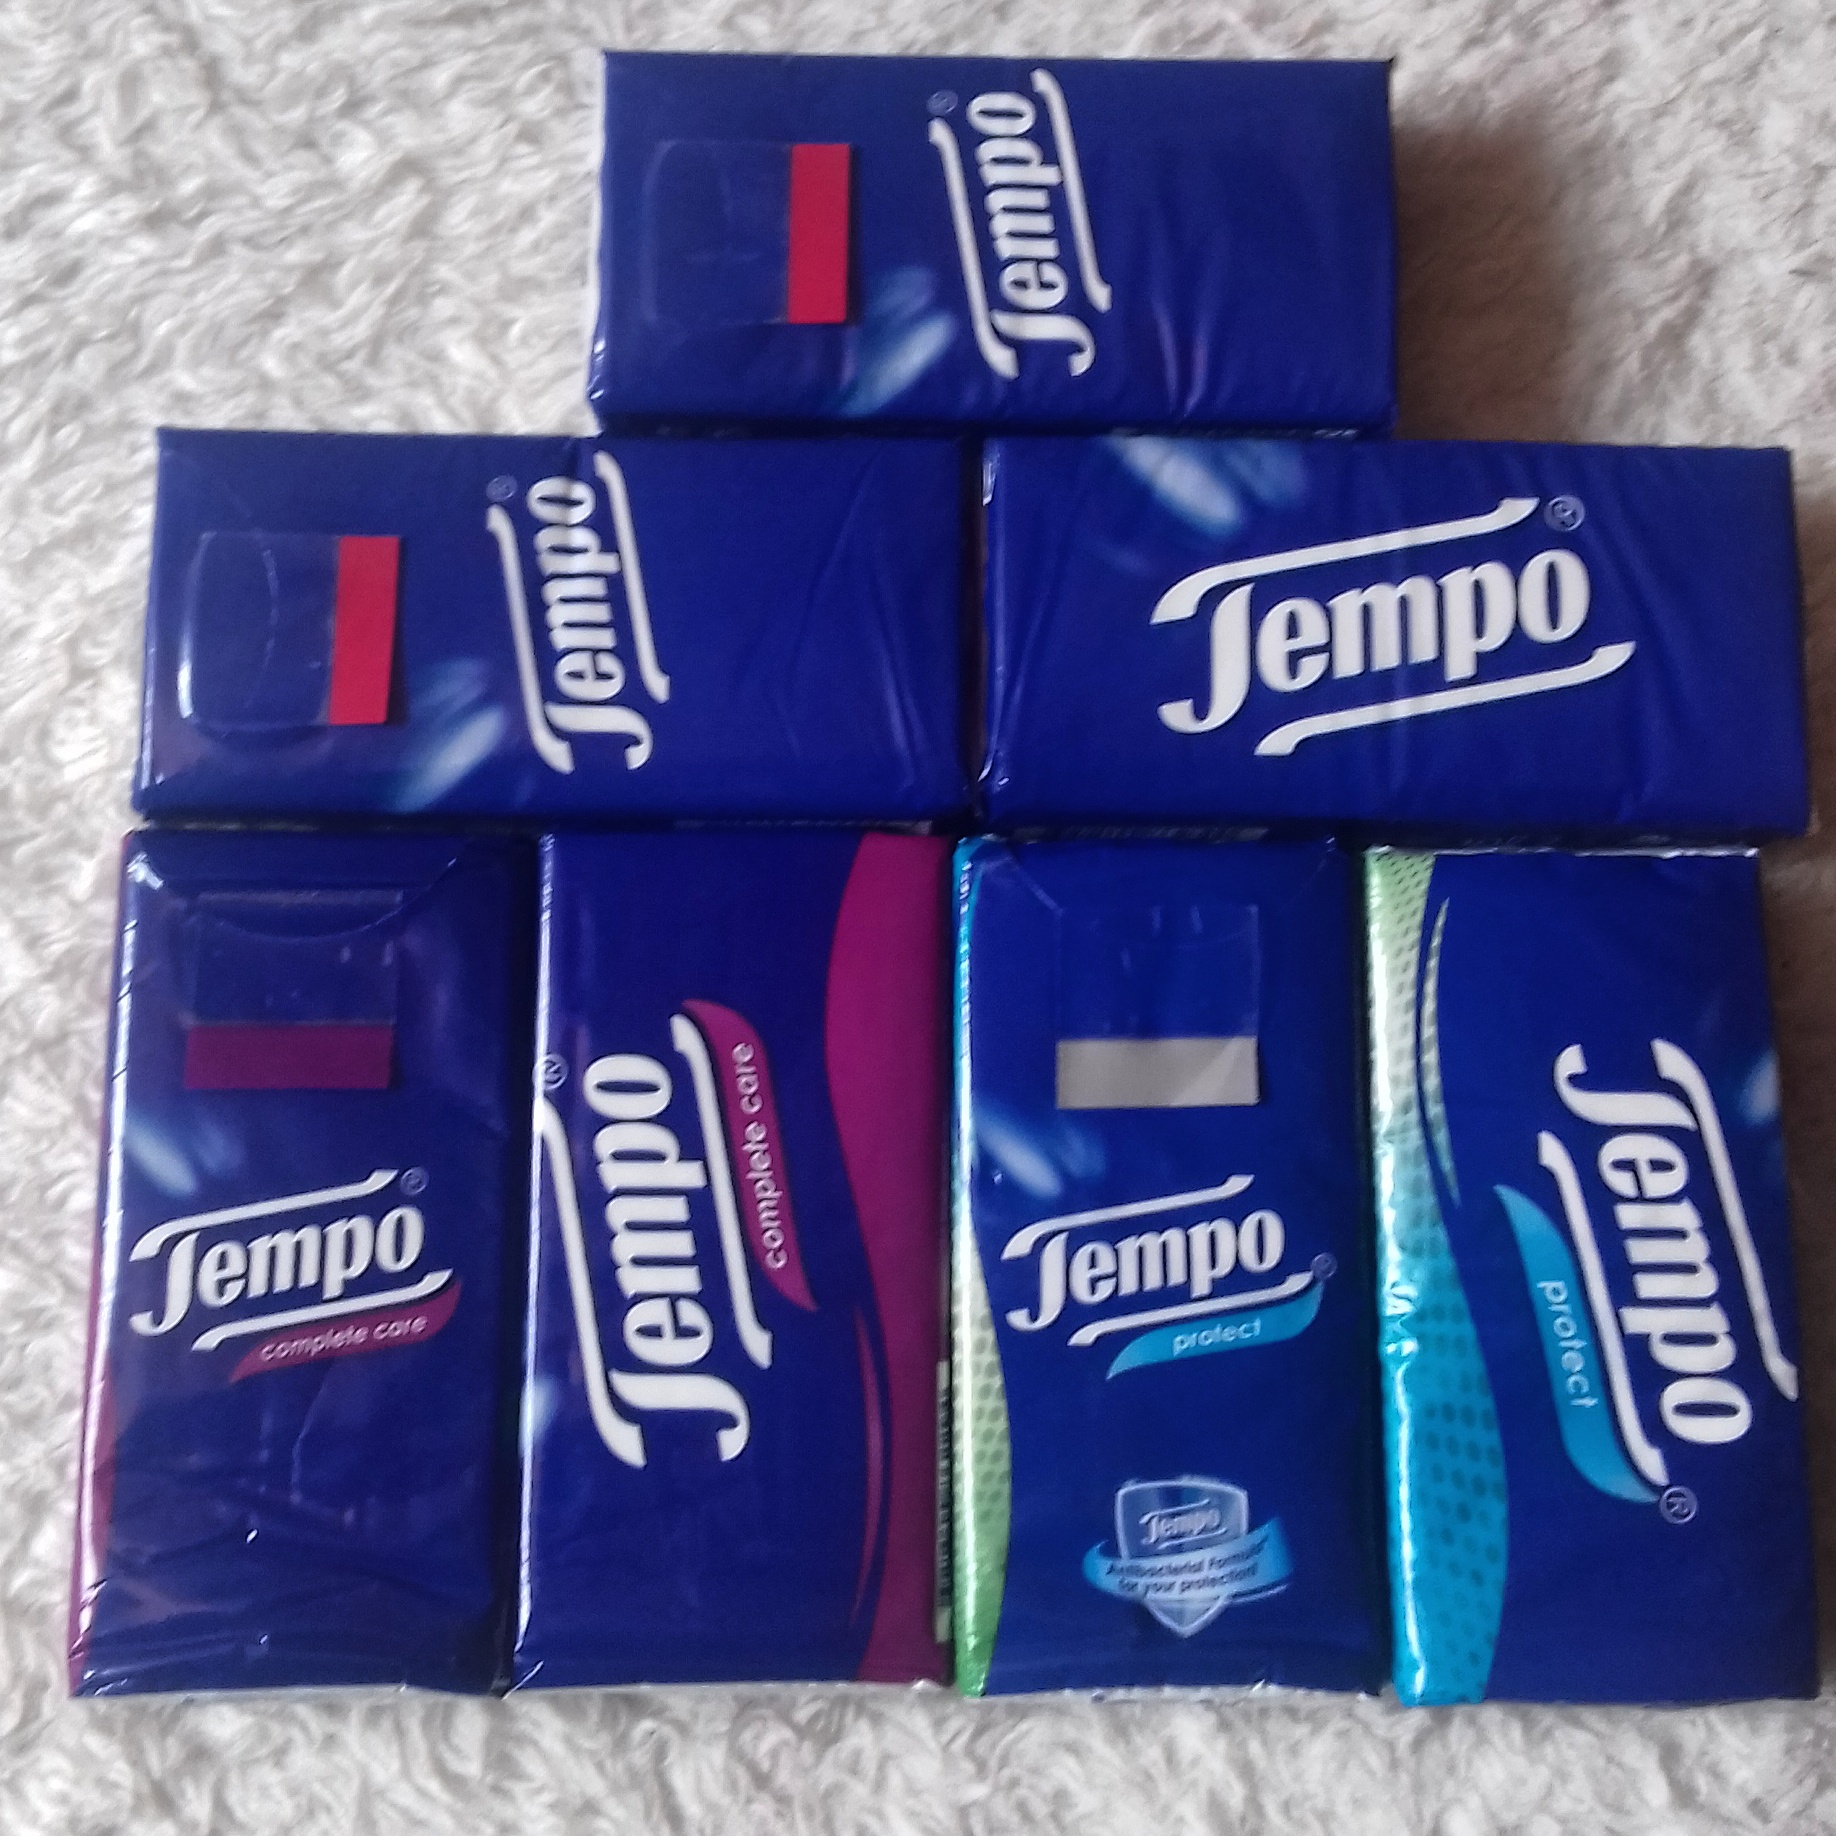 30 Tempo pocket tissues